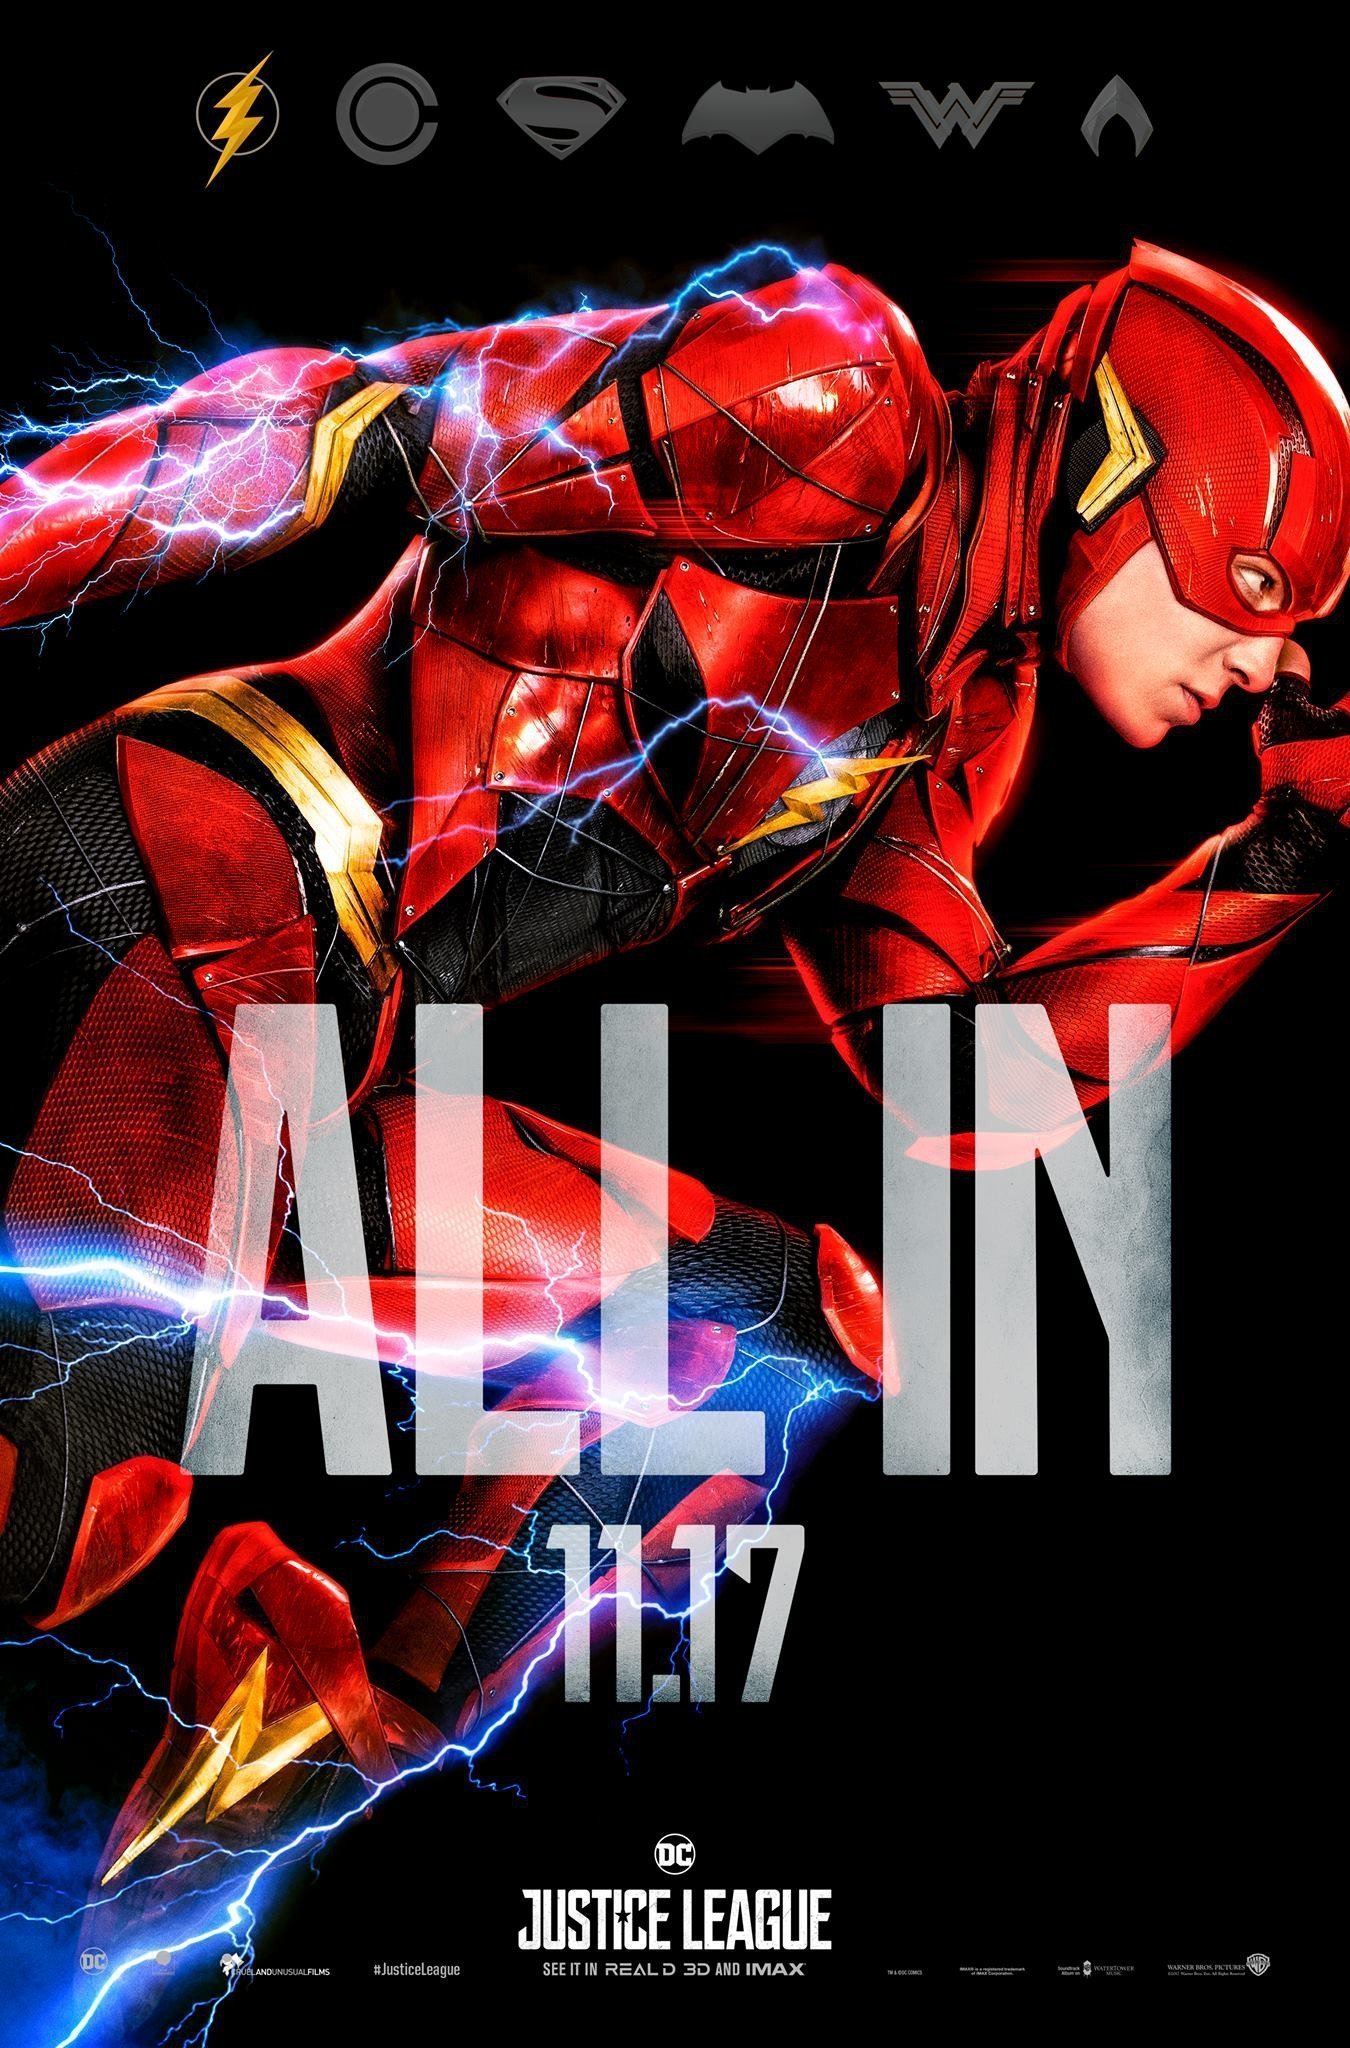 Poster "All in" du film Justice League avec Flash